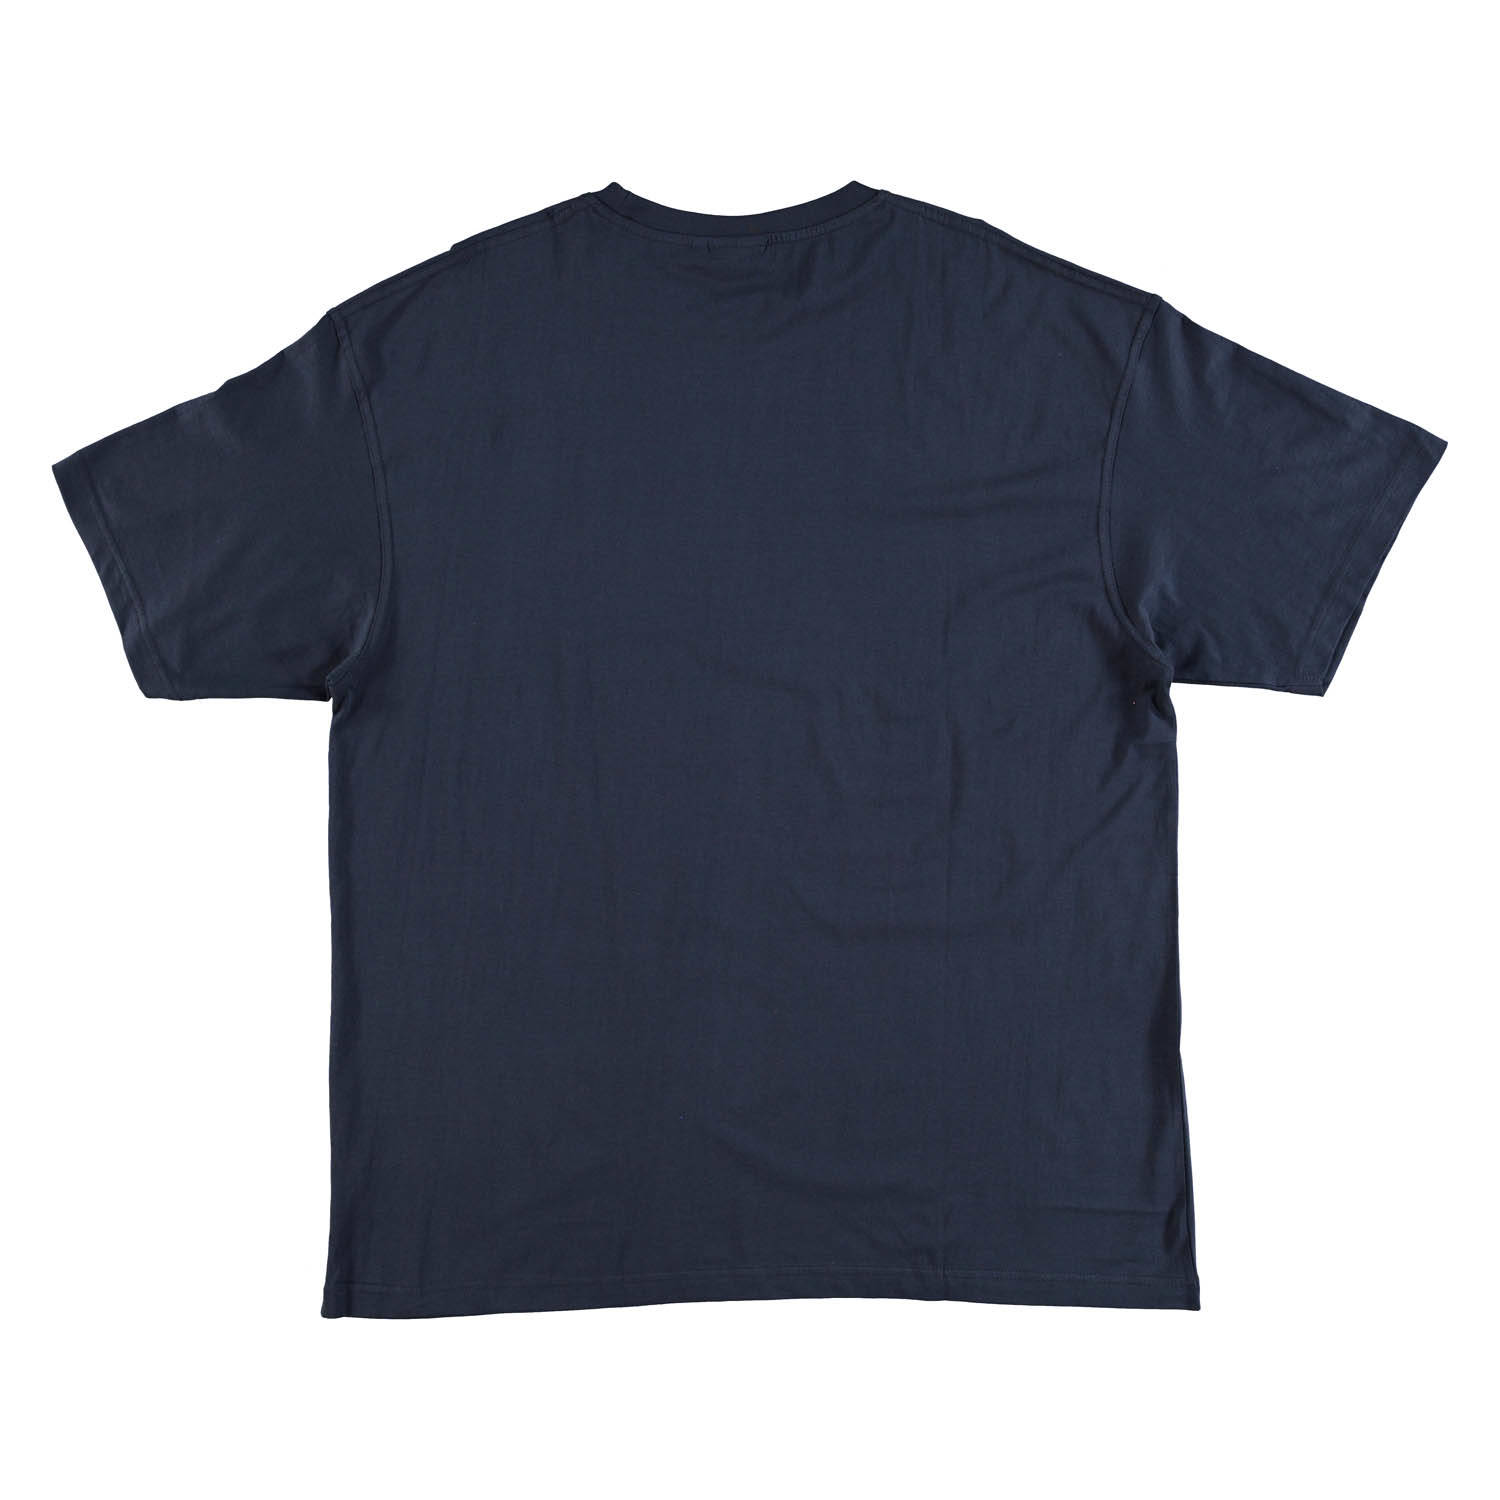 t-shirt-blÃ¥~Back~PROCESSED[1] – Storerobert